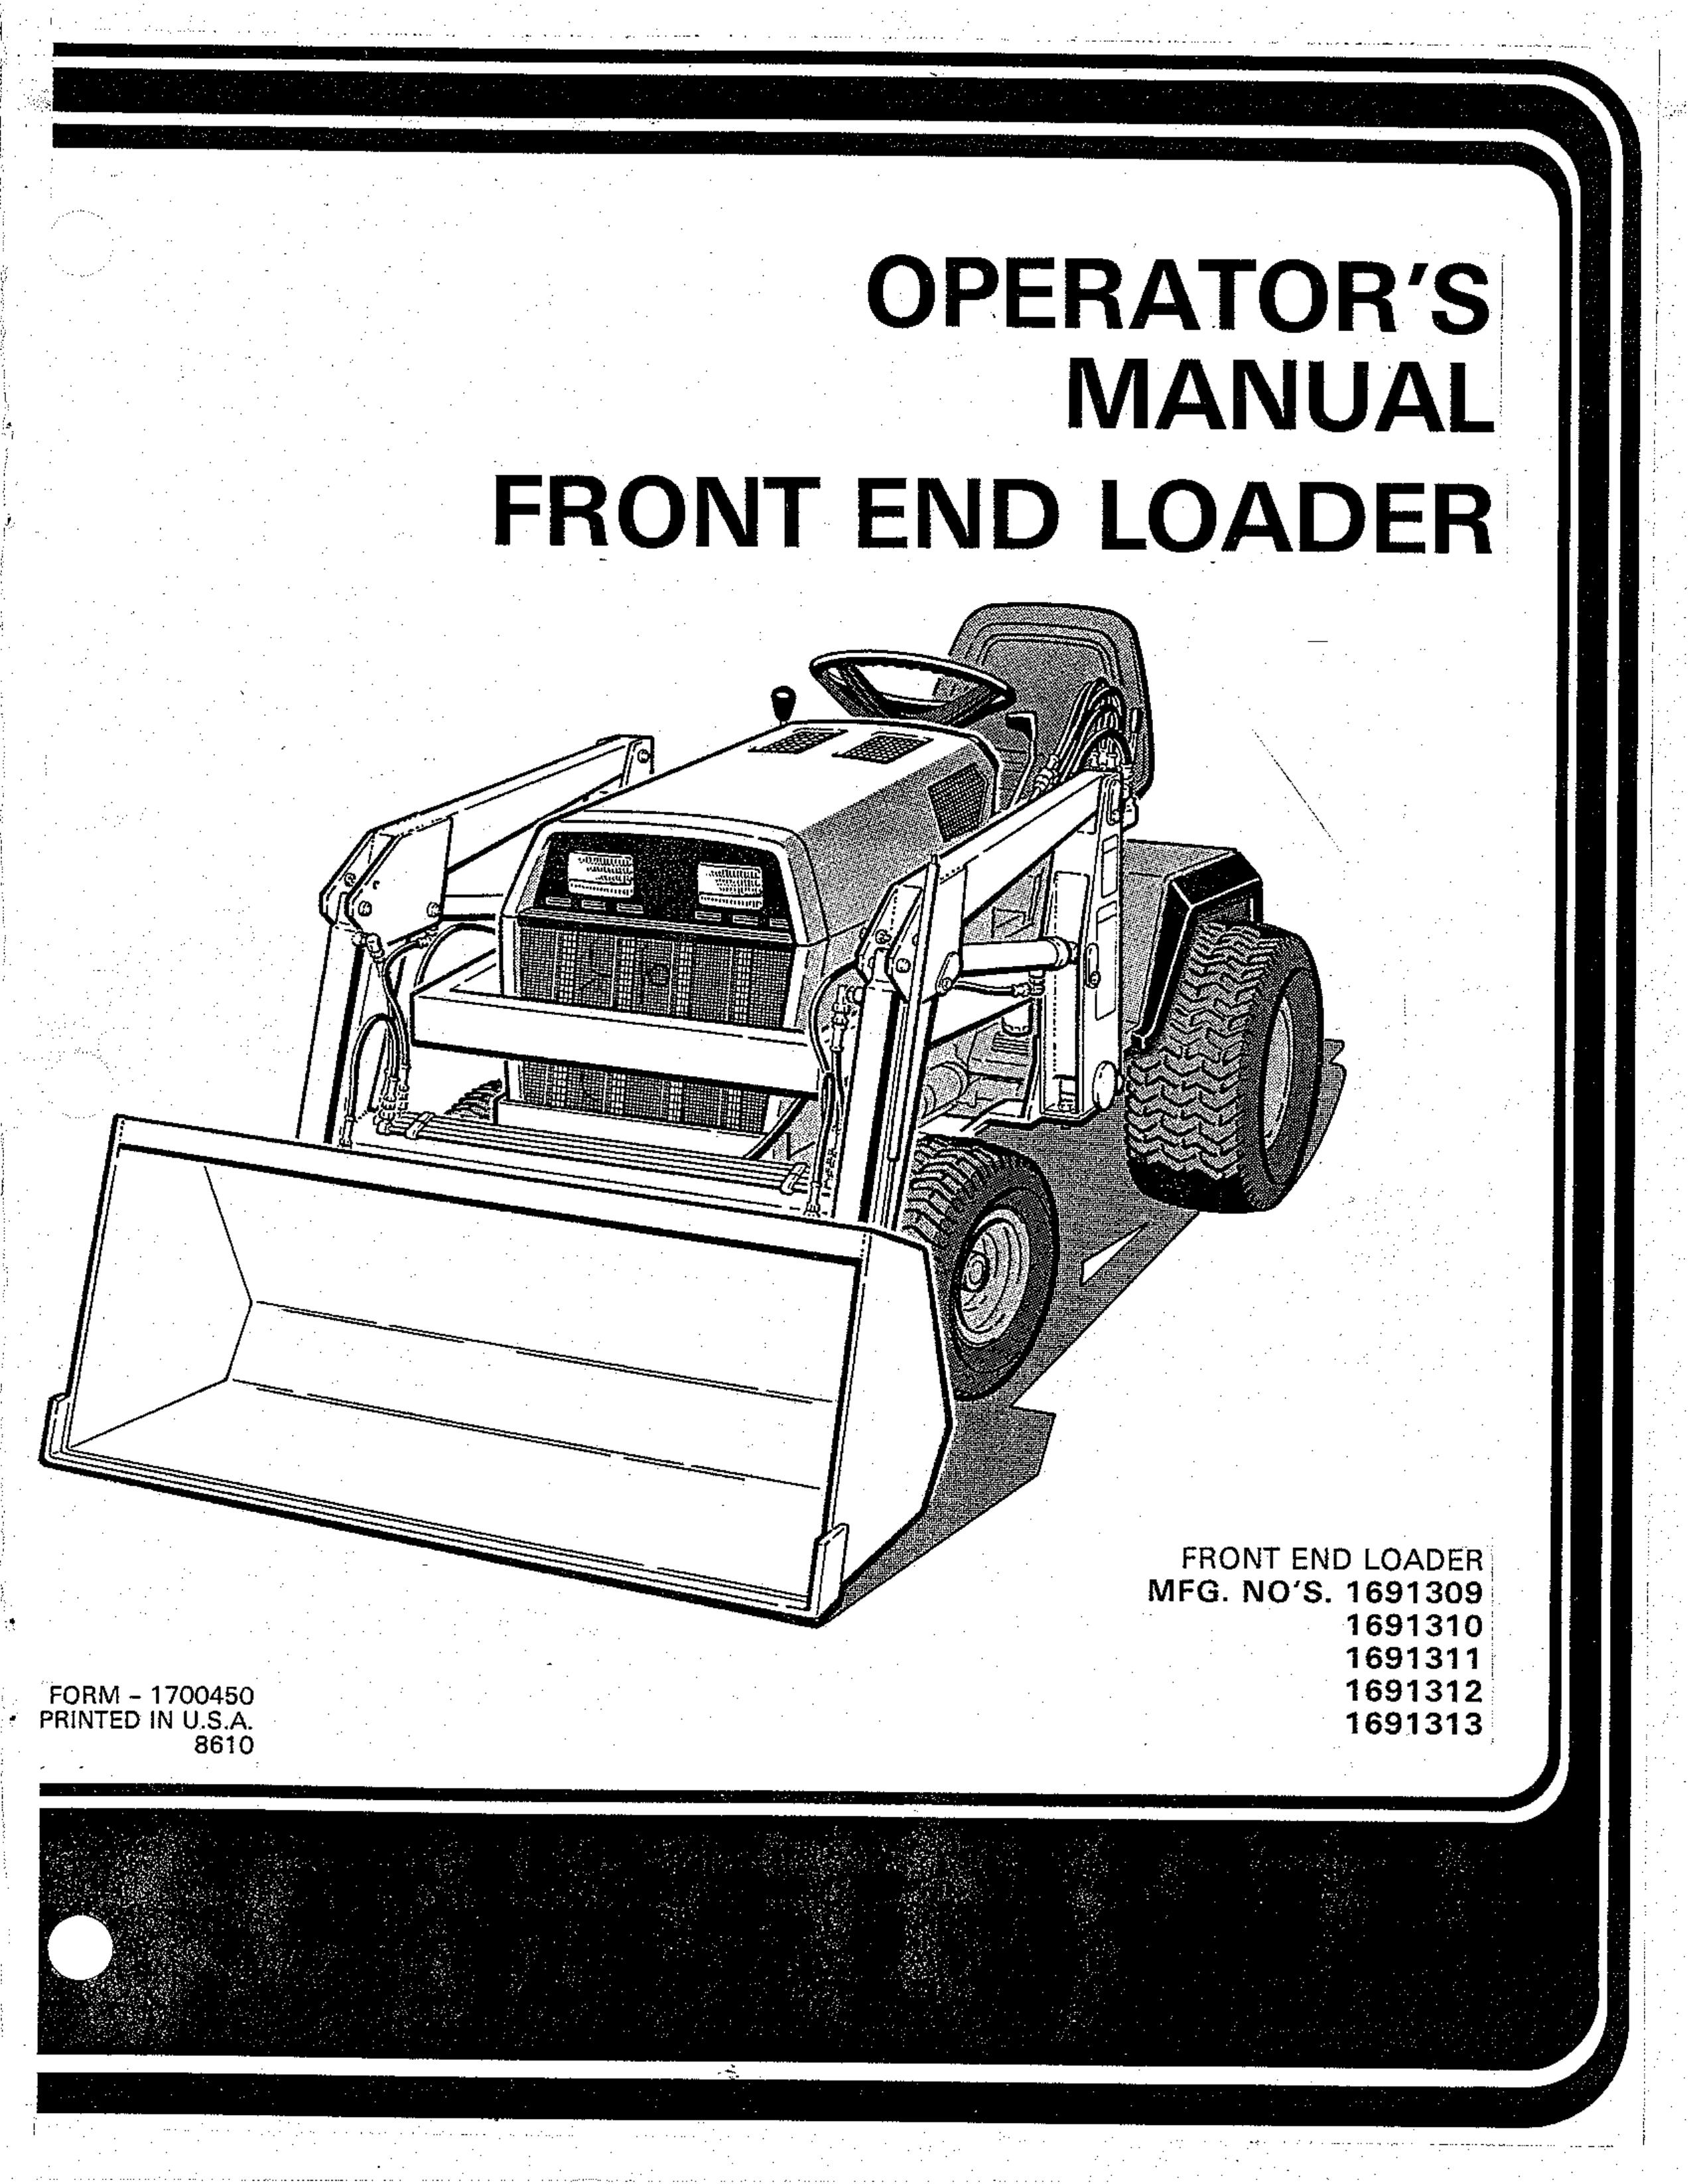 Snapper 1691313 Compact Loader User Manual